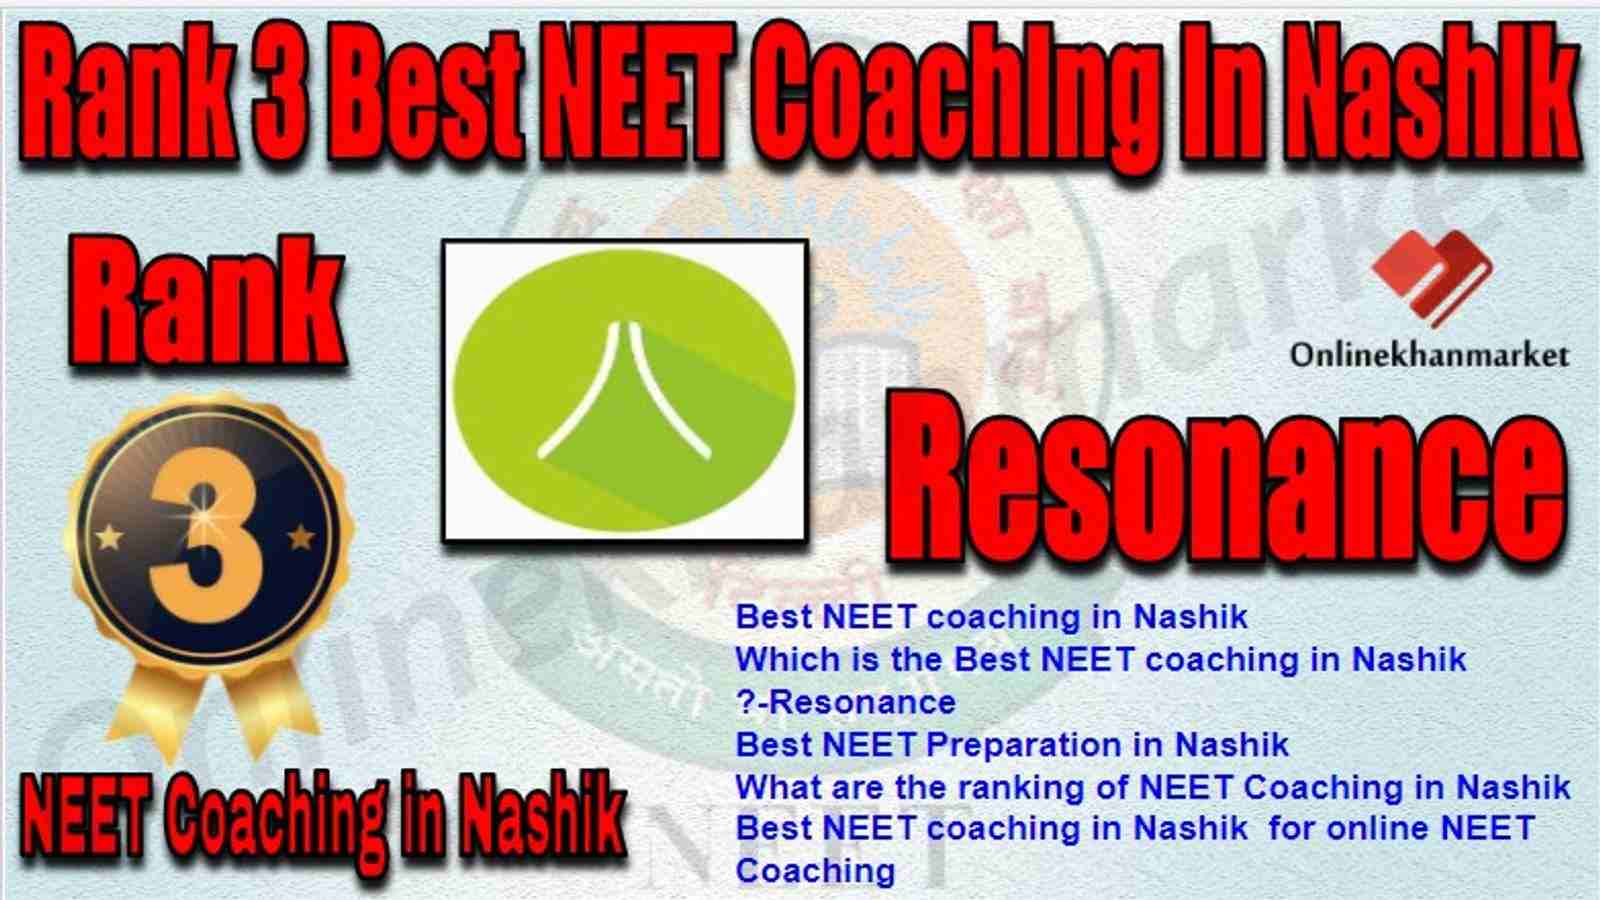 Rank 3 Best NEET Coaching Nashik